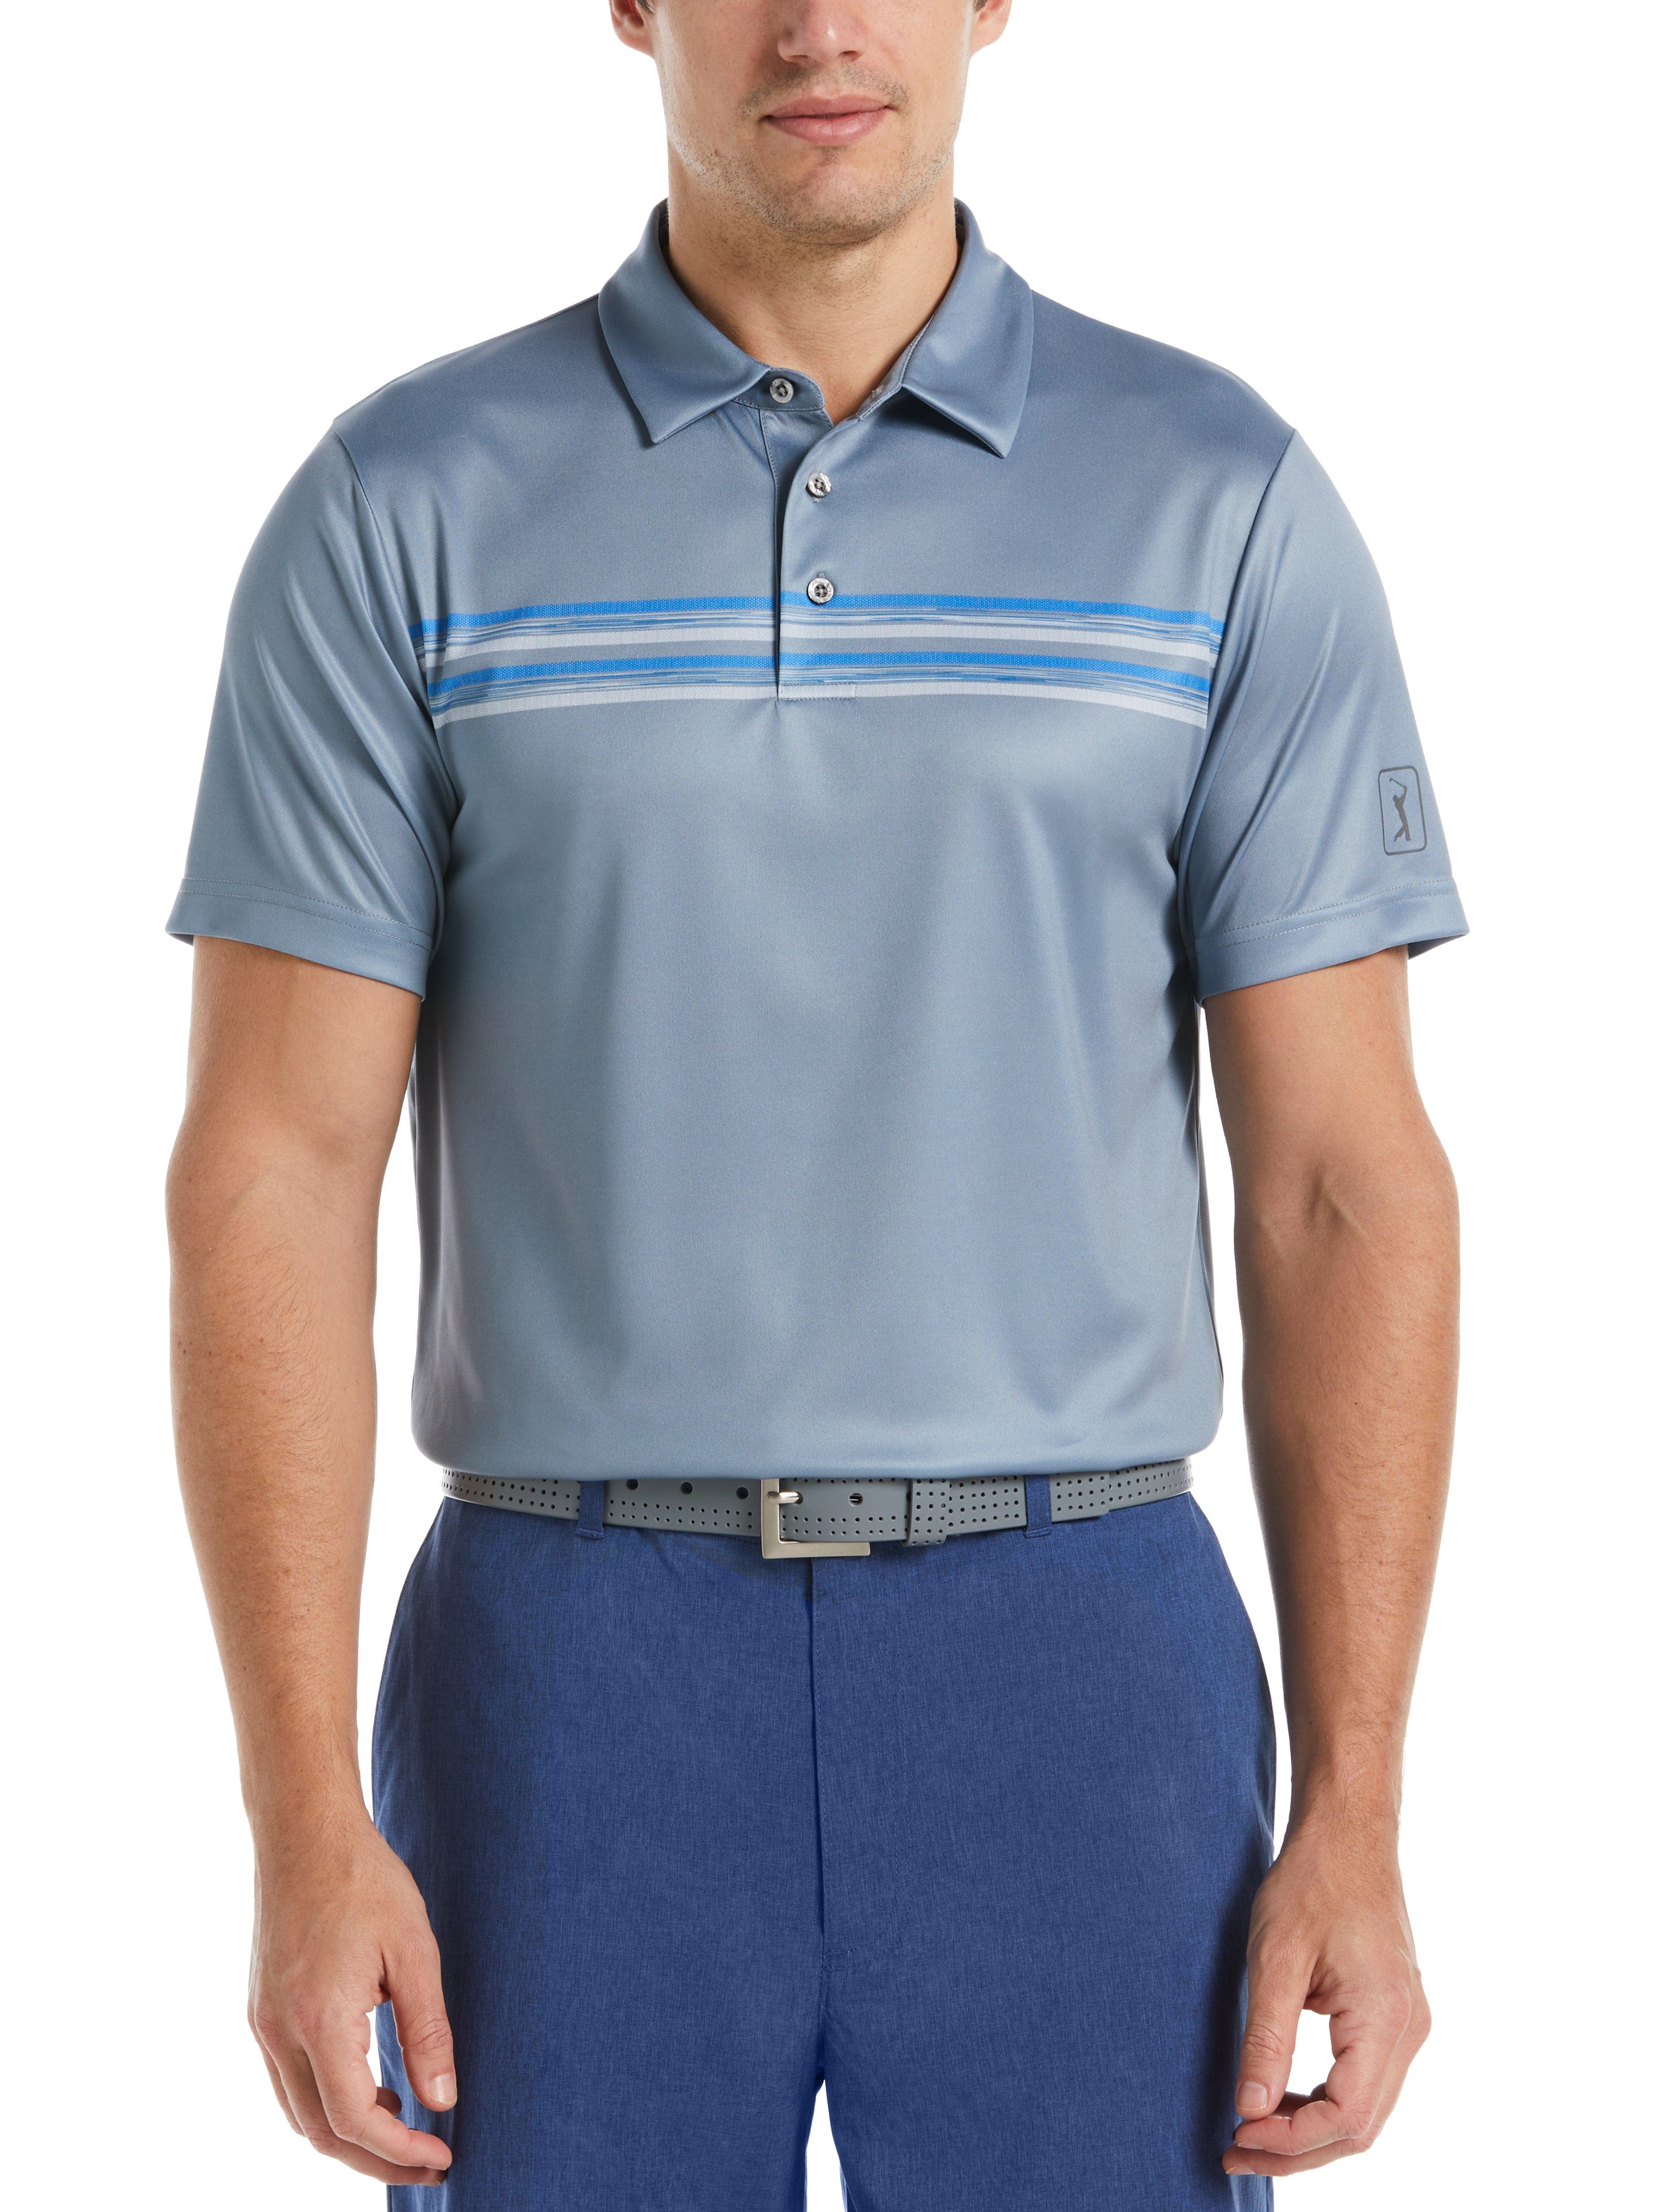 PGA TOUR Apparel Mens Chest Stripe Golf Polo Shirt, Size XL, Tradewinds Gray, 100% Polyester | Golf Apparel Shop